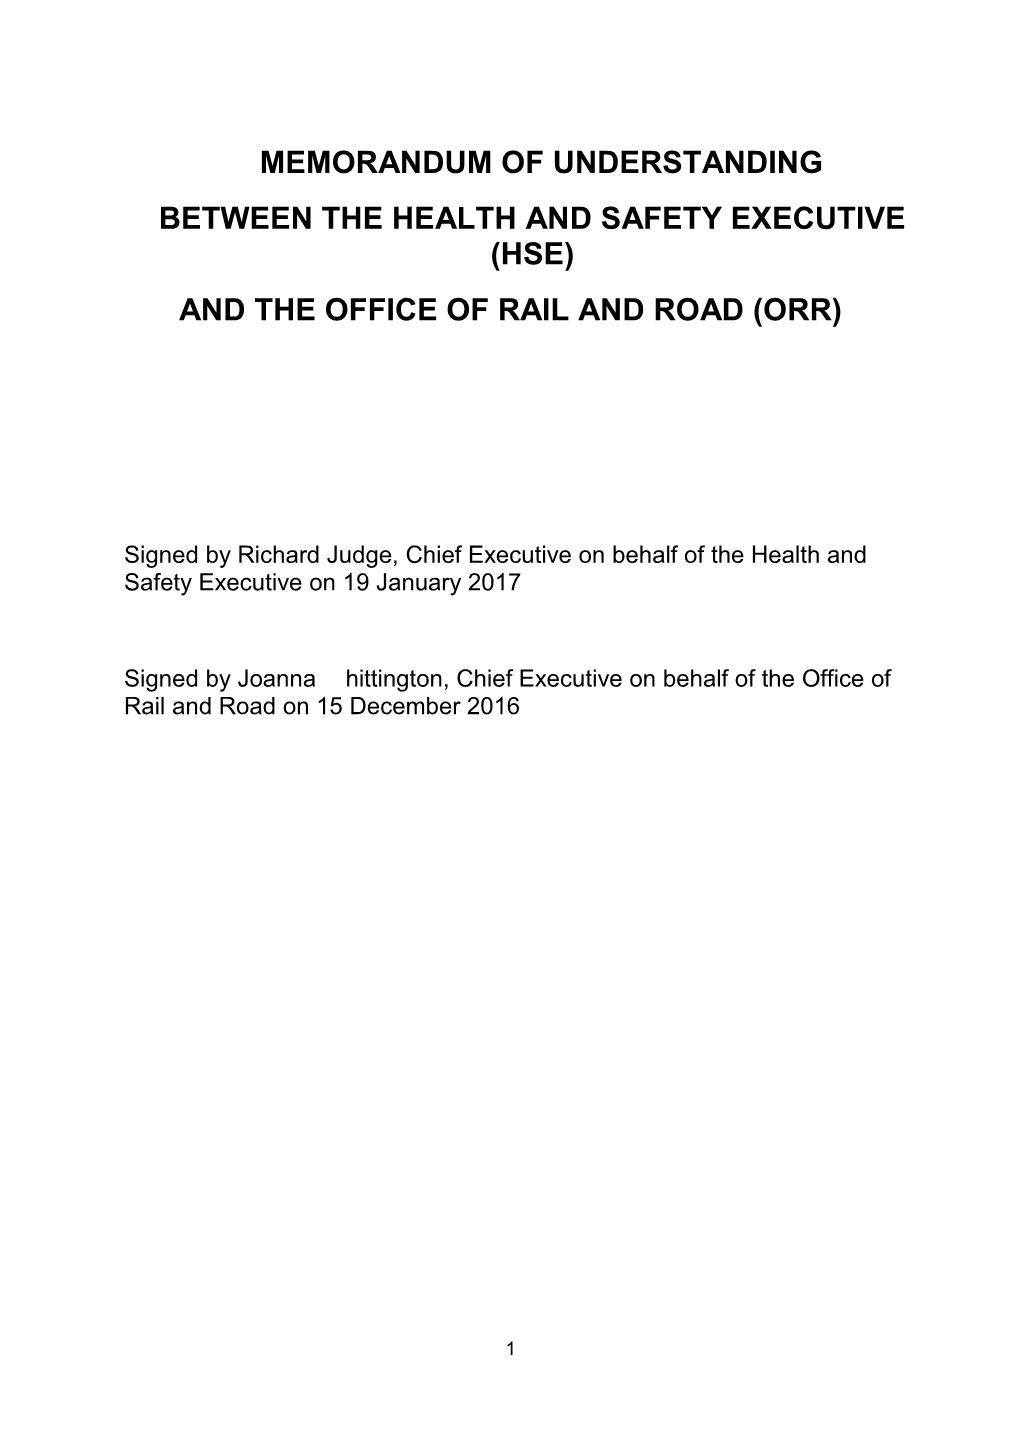 Memorandum of Understanding Between HSE and the Office of Rail